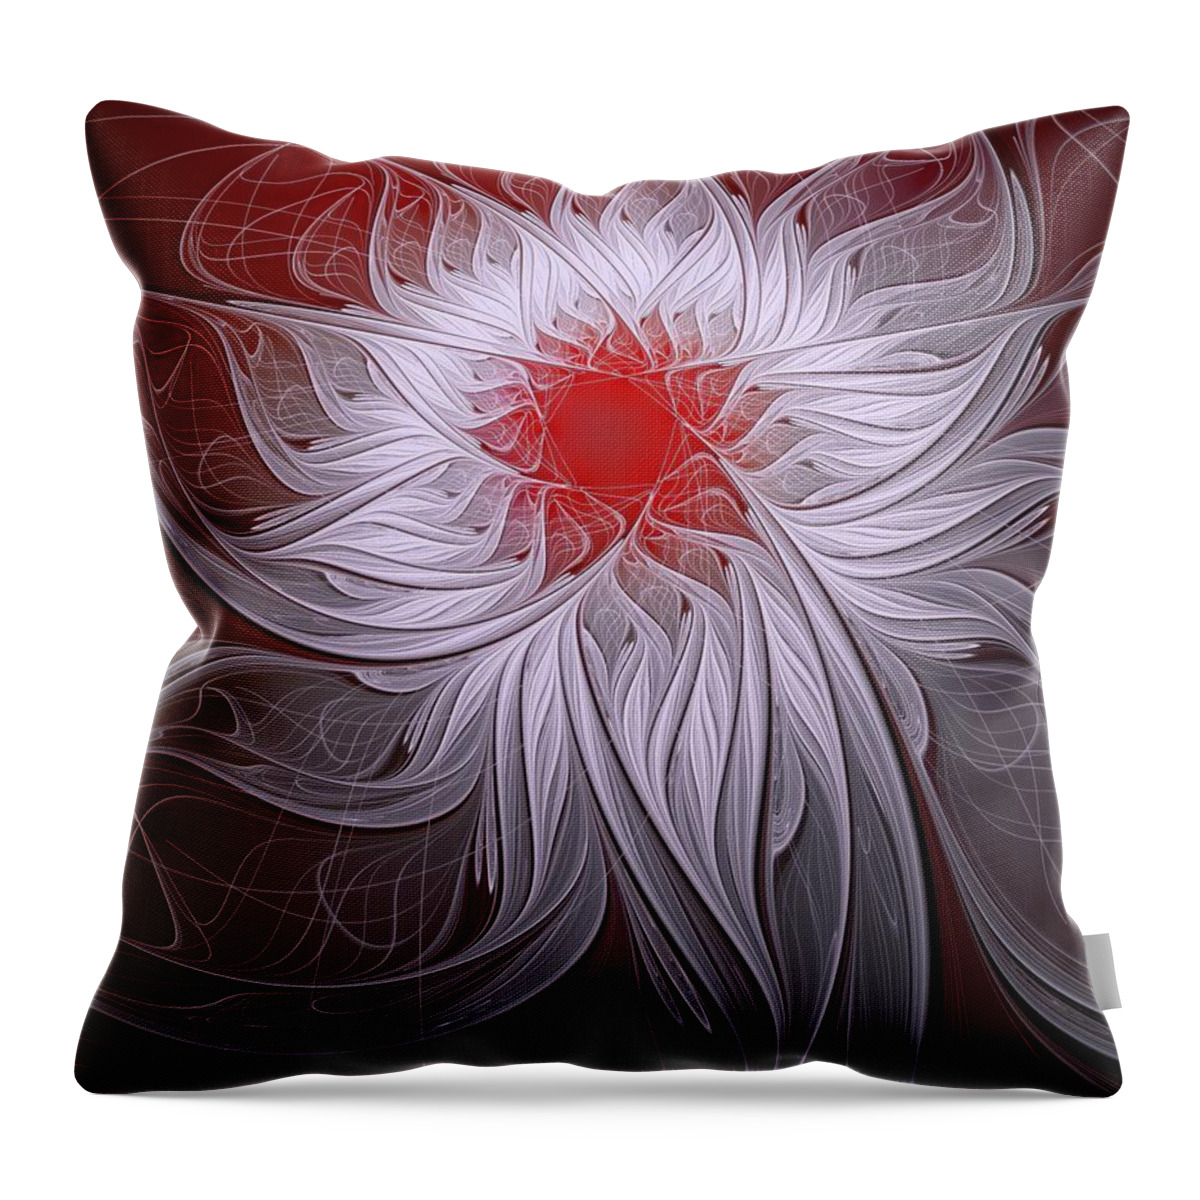 Digital Art Throw Pillow featuring the digital art Blush by Amanda Moore